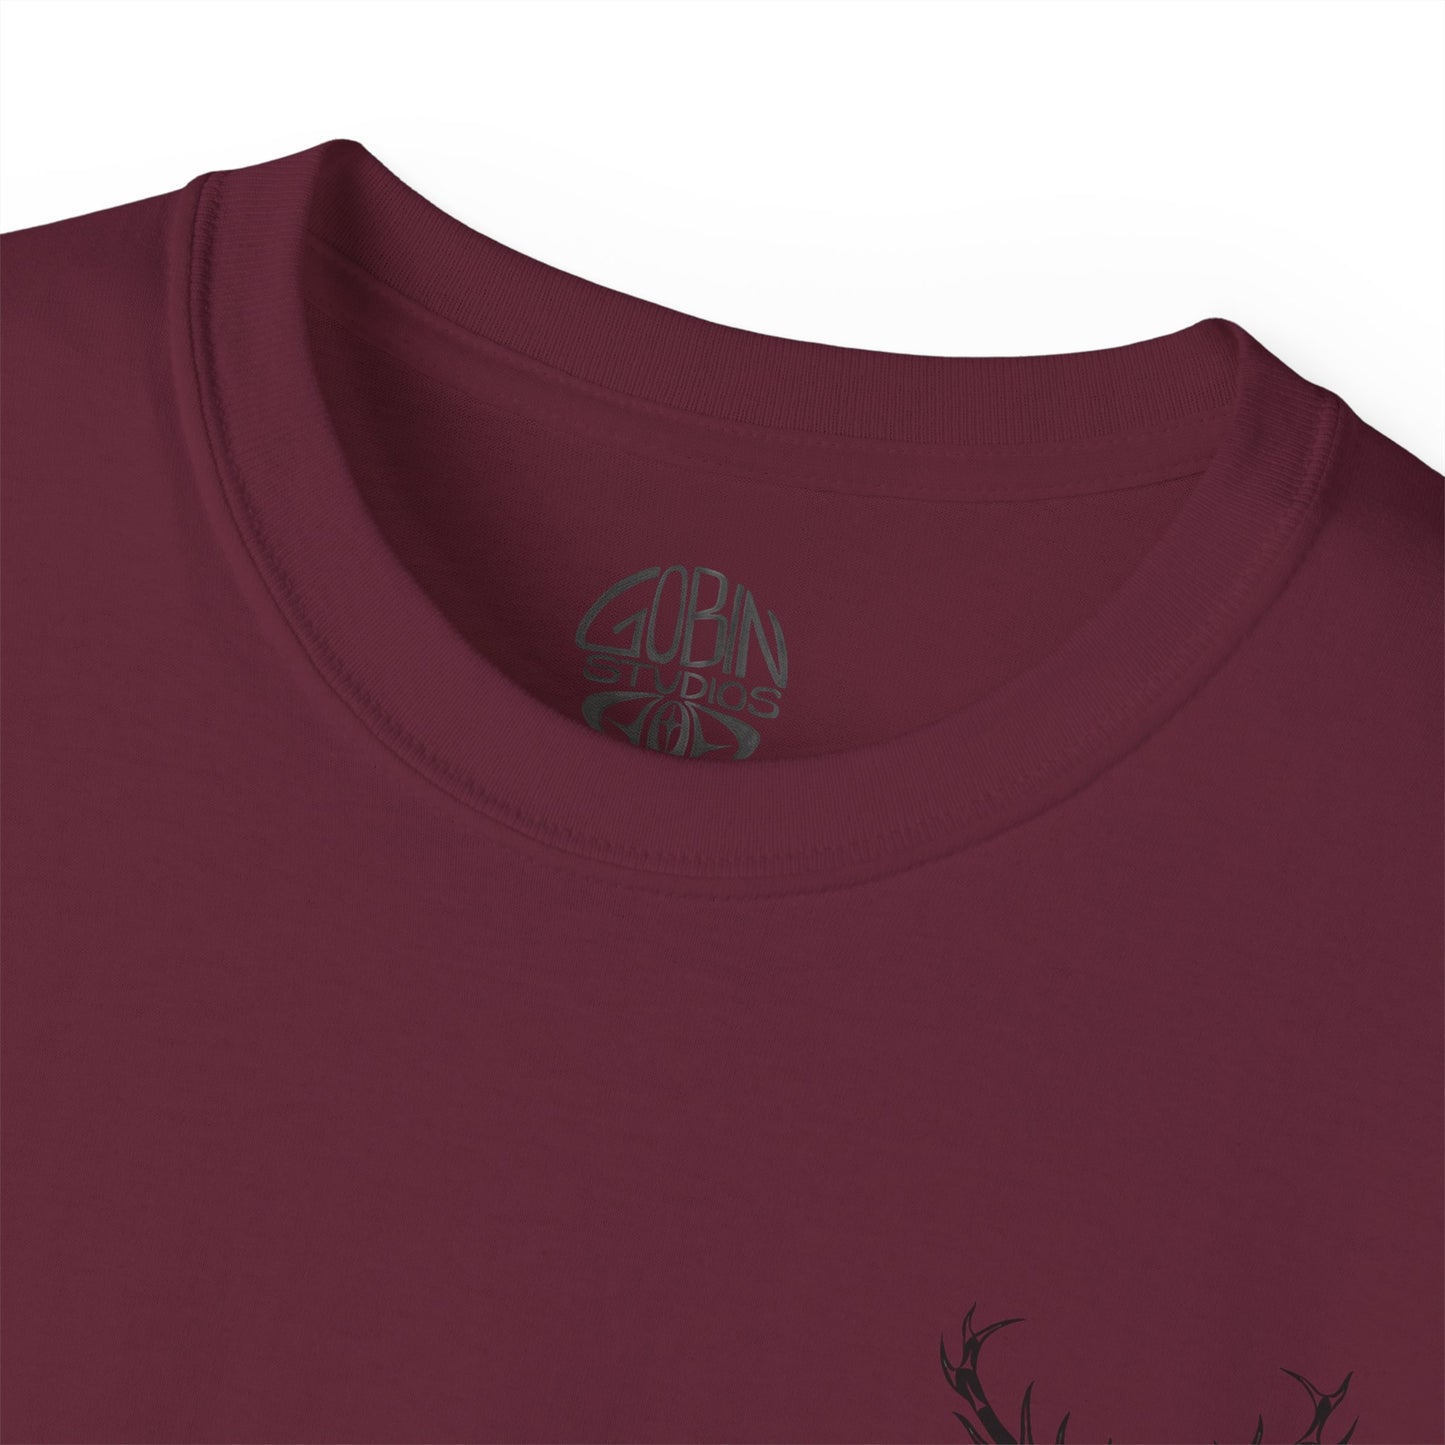 Elk Design "DO YOU EVEN HUNT" Shirt